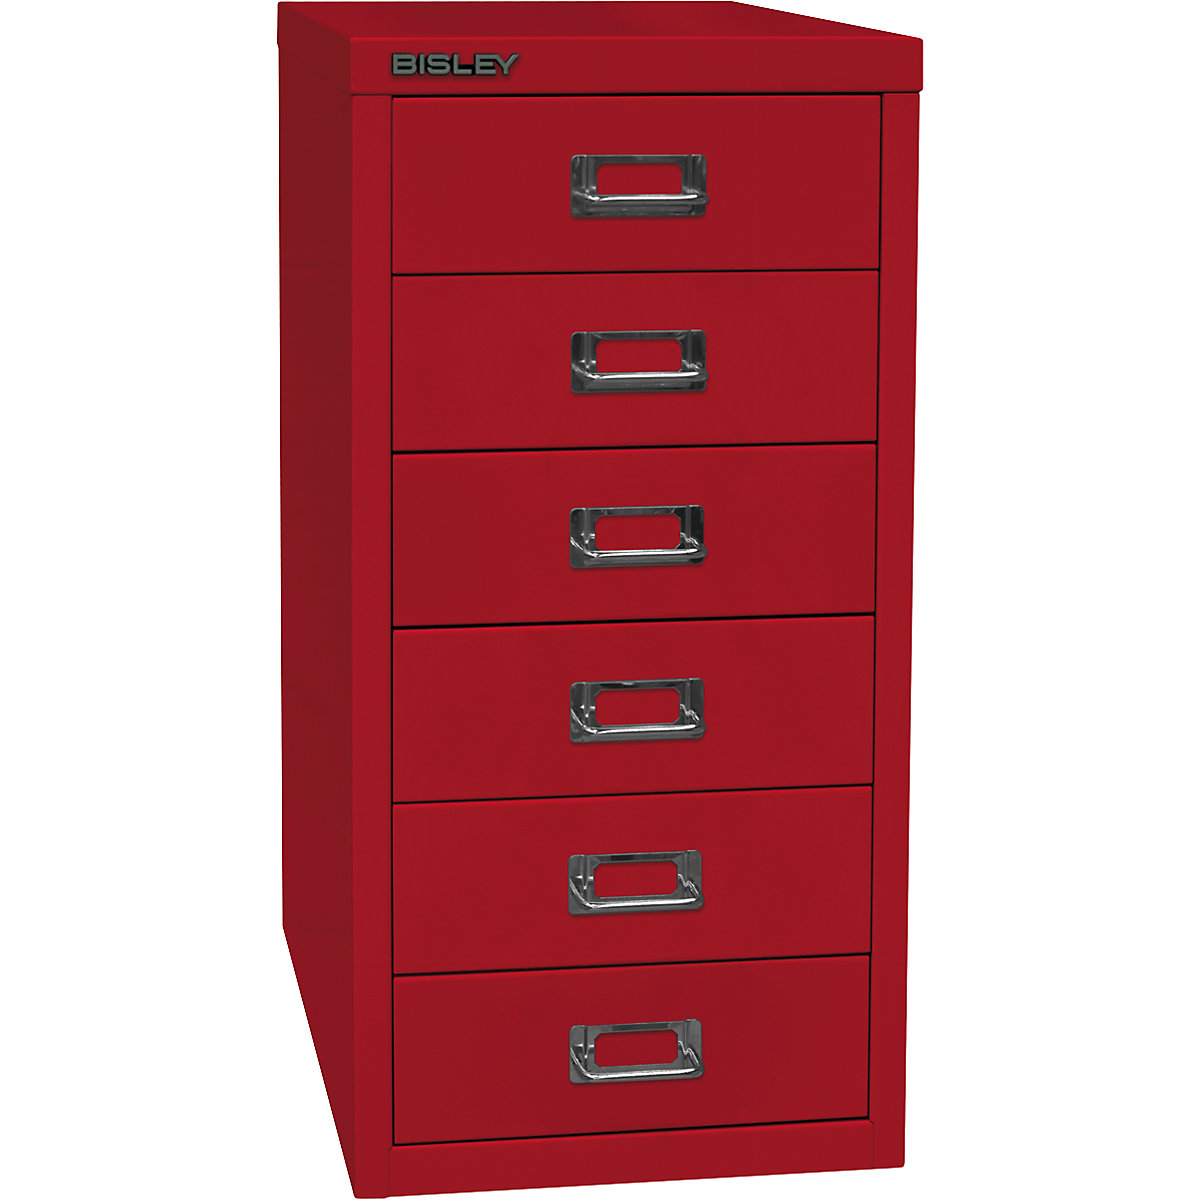 MultiDrawer™ 29 series – BISLEY, A4, 6 drawers, cardinal red-9